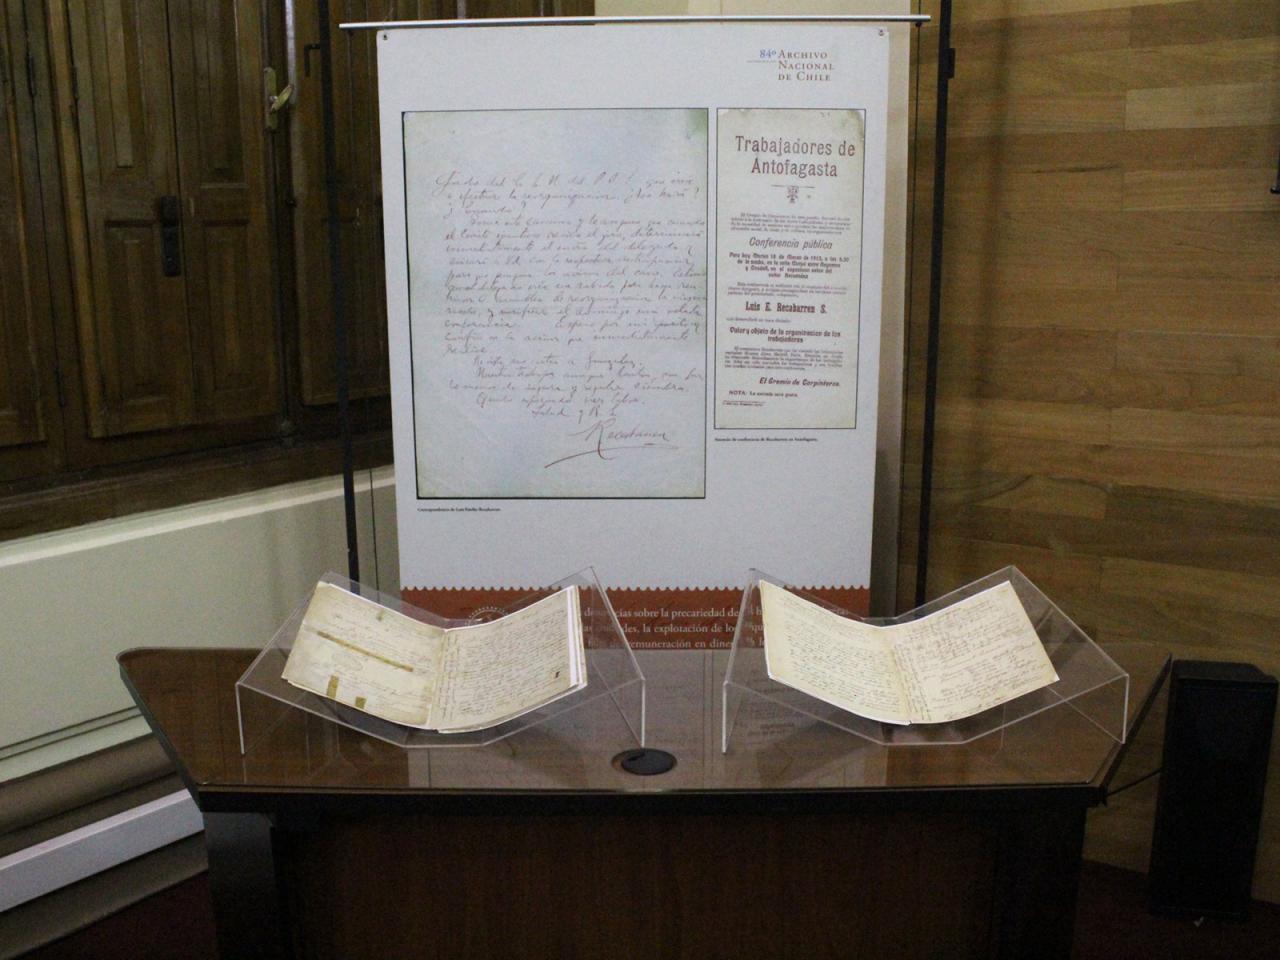 Documentos exhibidos, pertenecientes a Luis Emilio Recabaren.